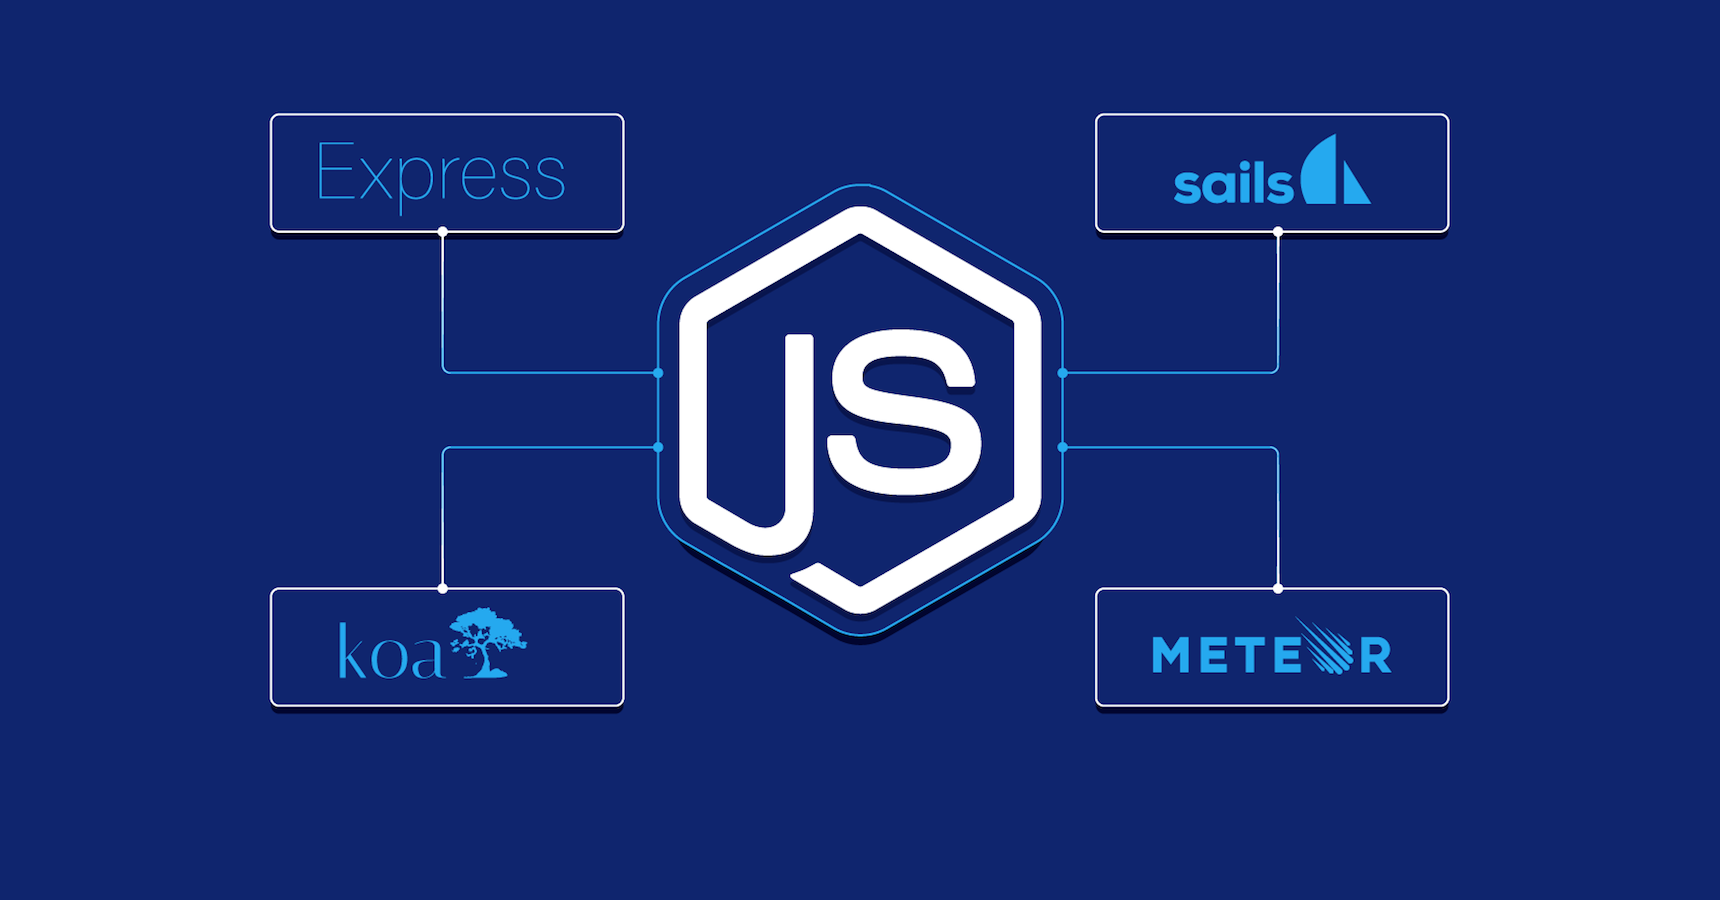 Express, Koa, Meteor, Sails.js: A Node.js Framework Comparison